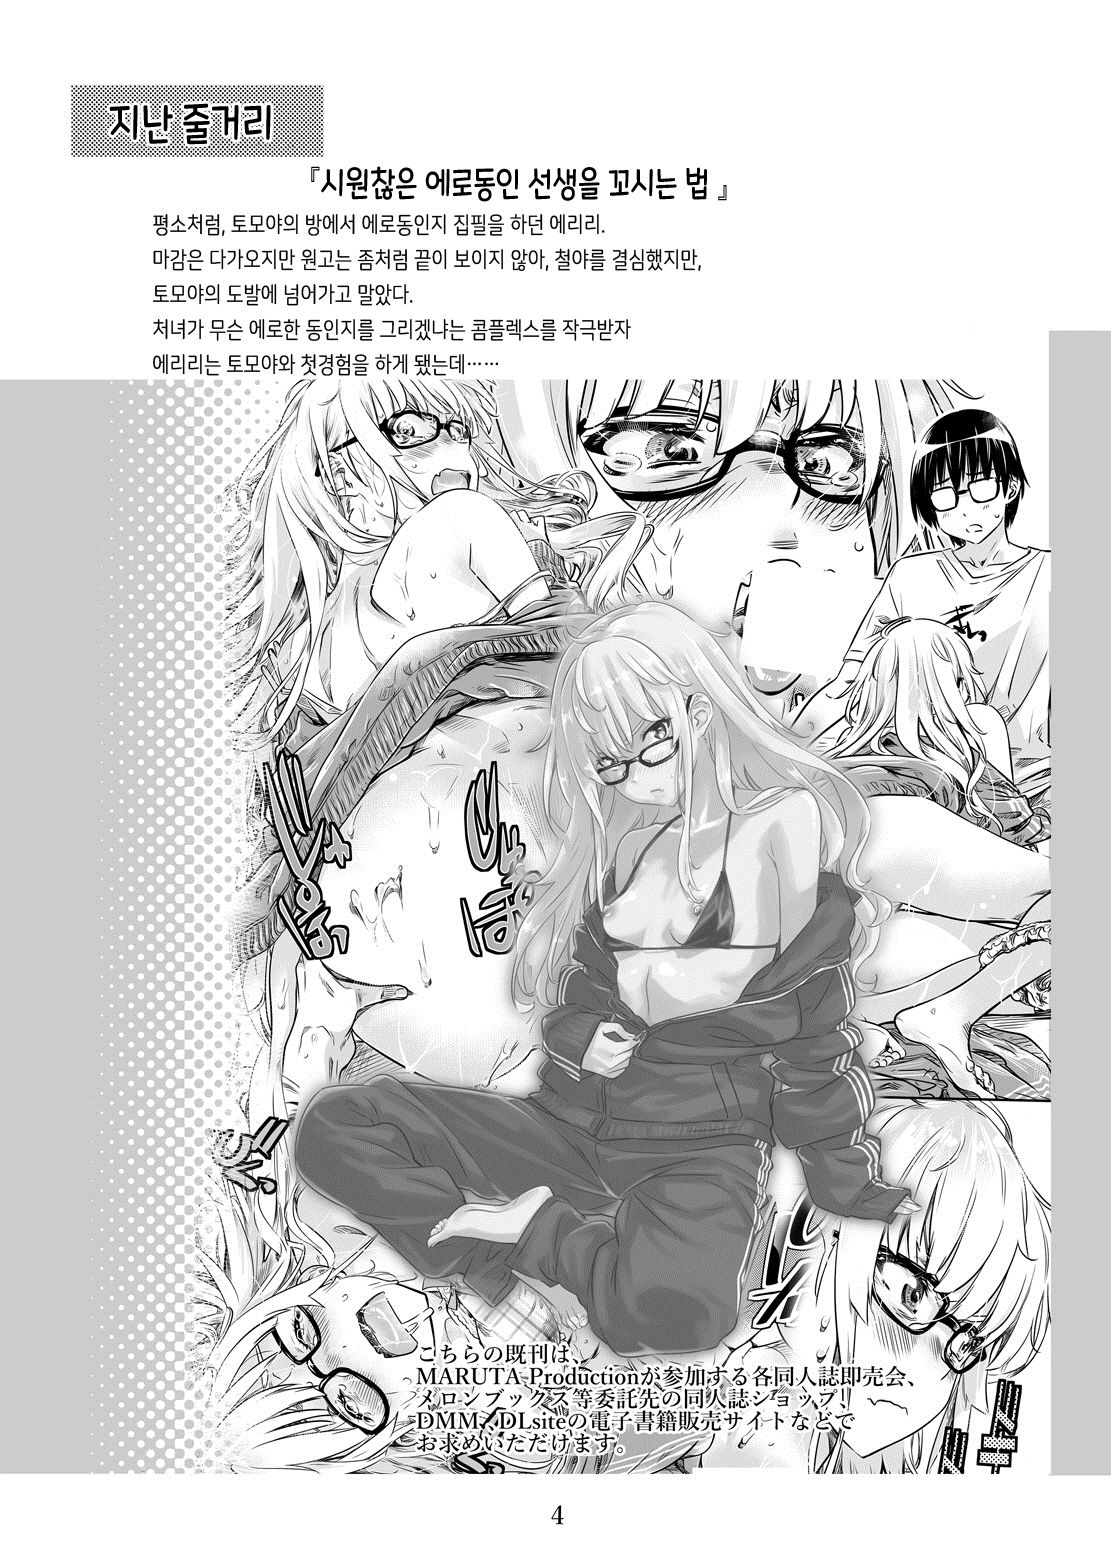 [MARUTA Production (MARUTA)] Saenai Heroine Series Vol. 2 - Saenai Namaashi Senpai no Ijirikata | 시원찮은 히로인 시리즈 Vol. 2 - 시원찮은 맨발선배의 장난방법 (Saenai Heroine no Sodatekata) [Korean] [Team AteLieR] [Digital] 3